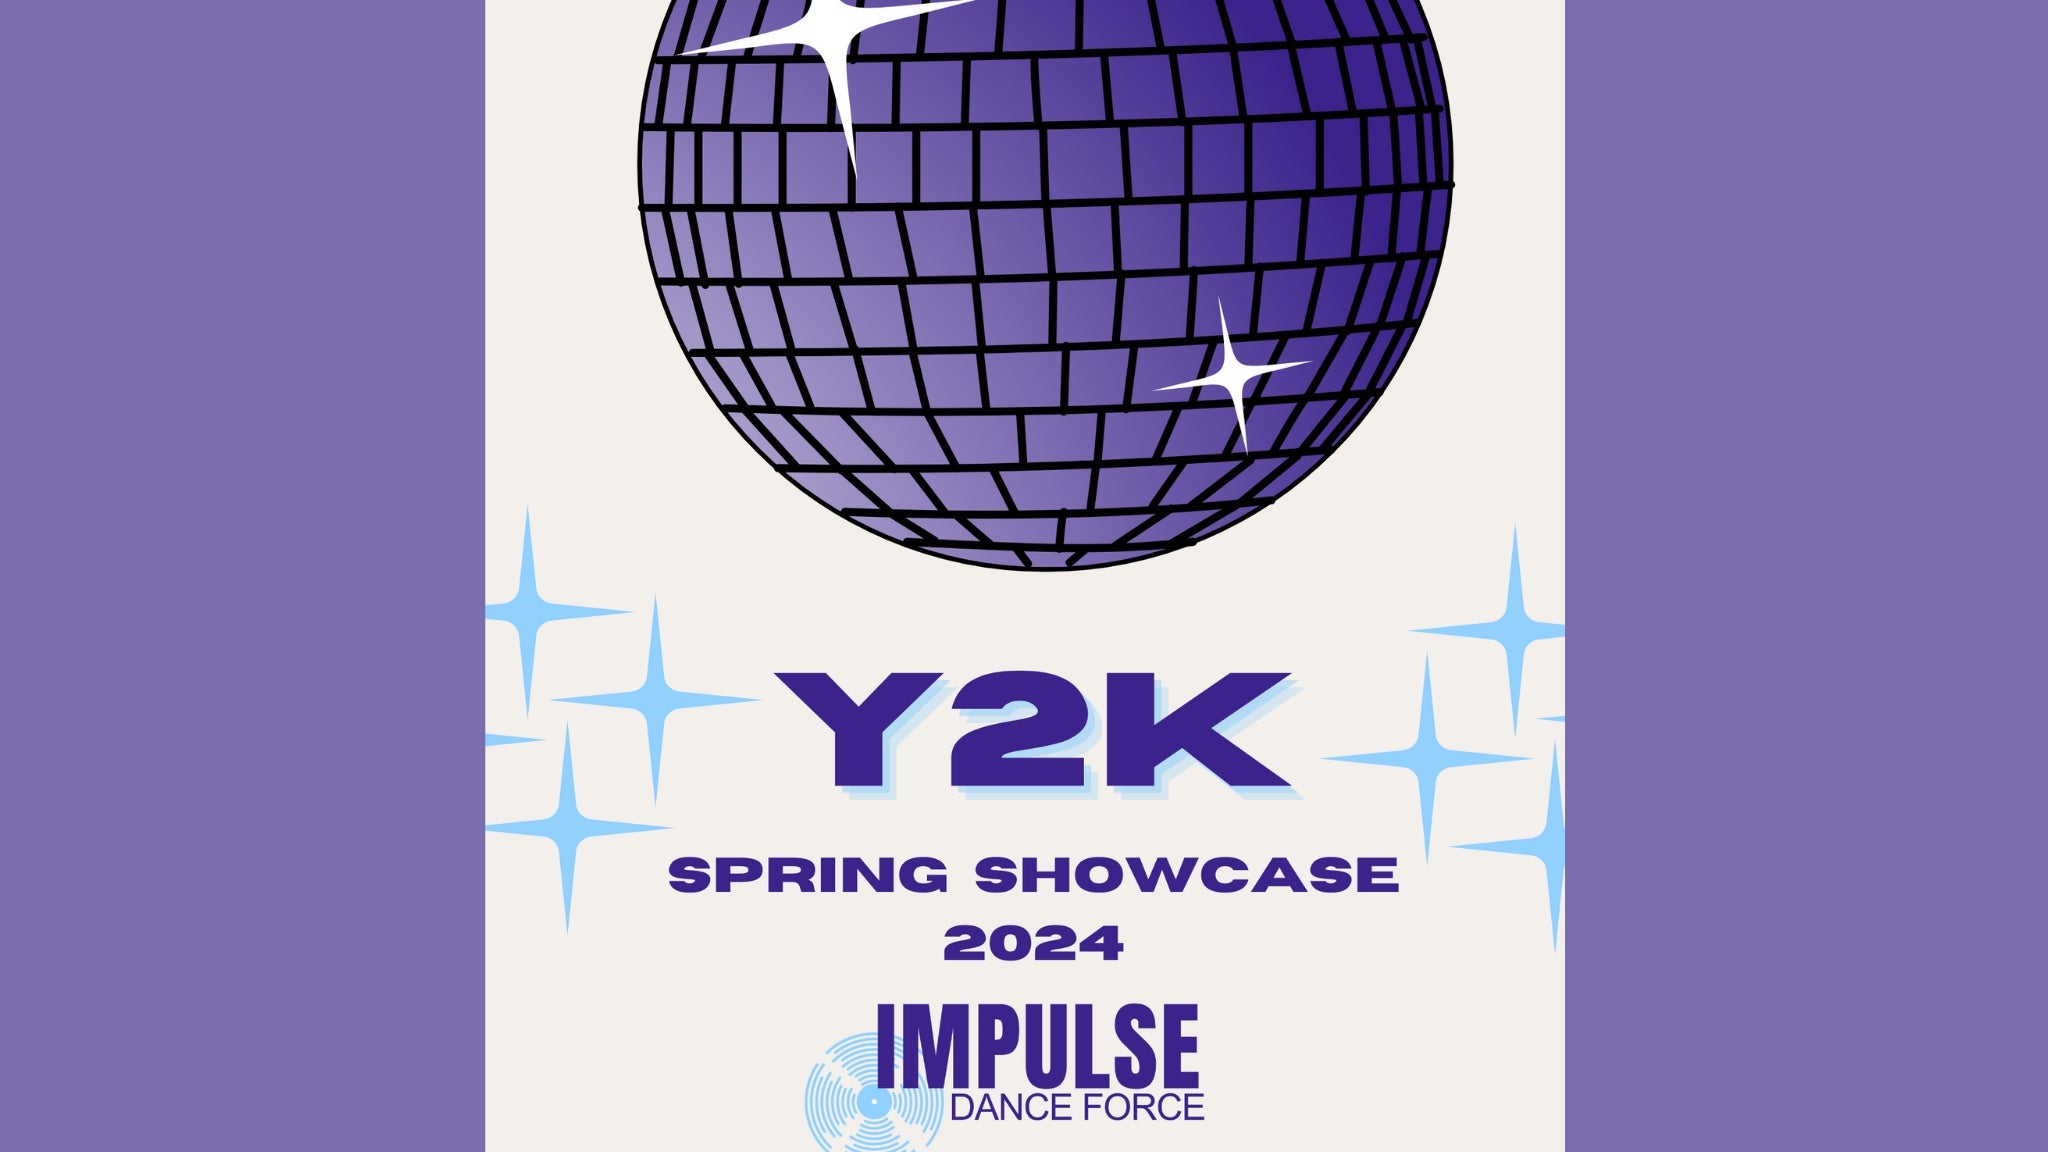 Impulse Dance Force Spring Showcase: Y2K